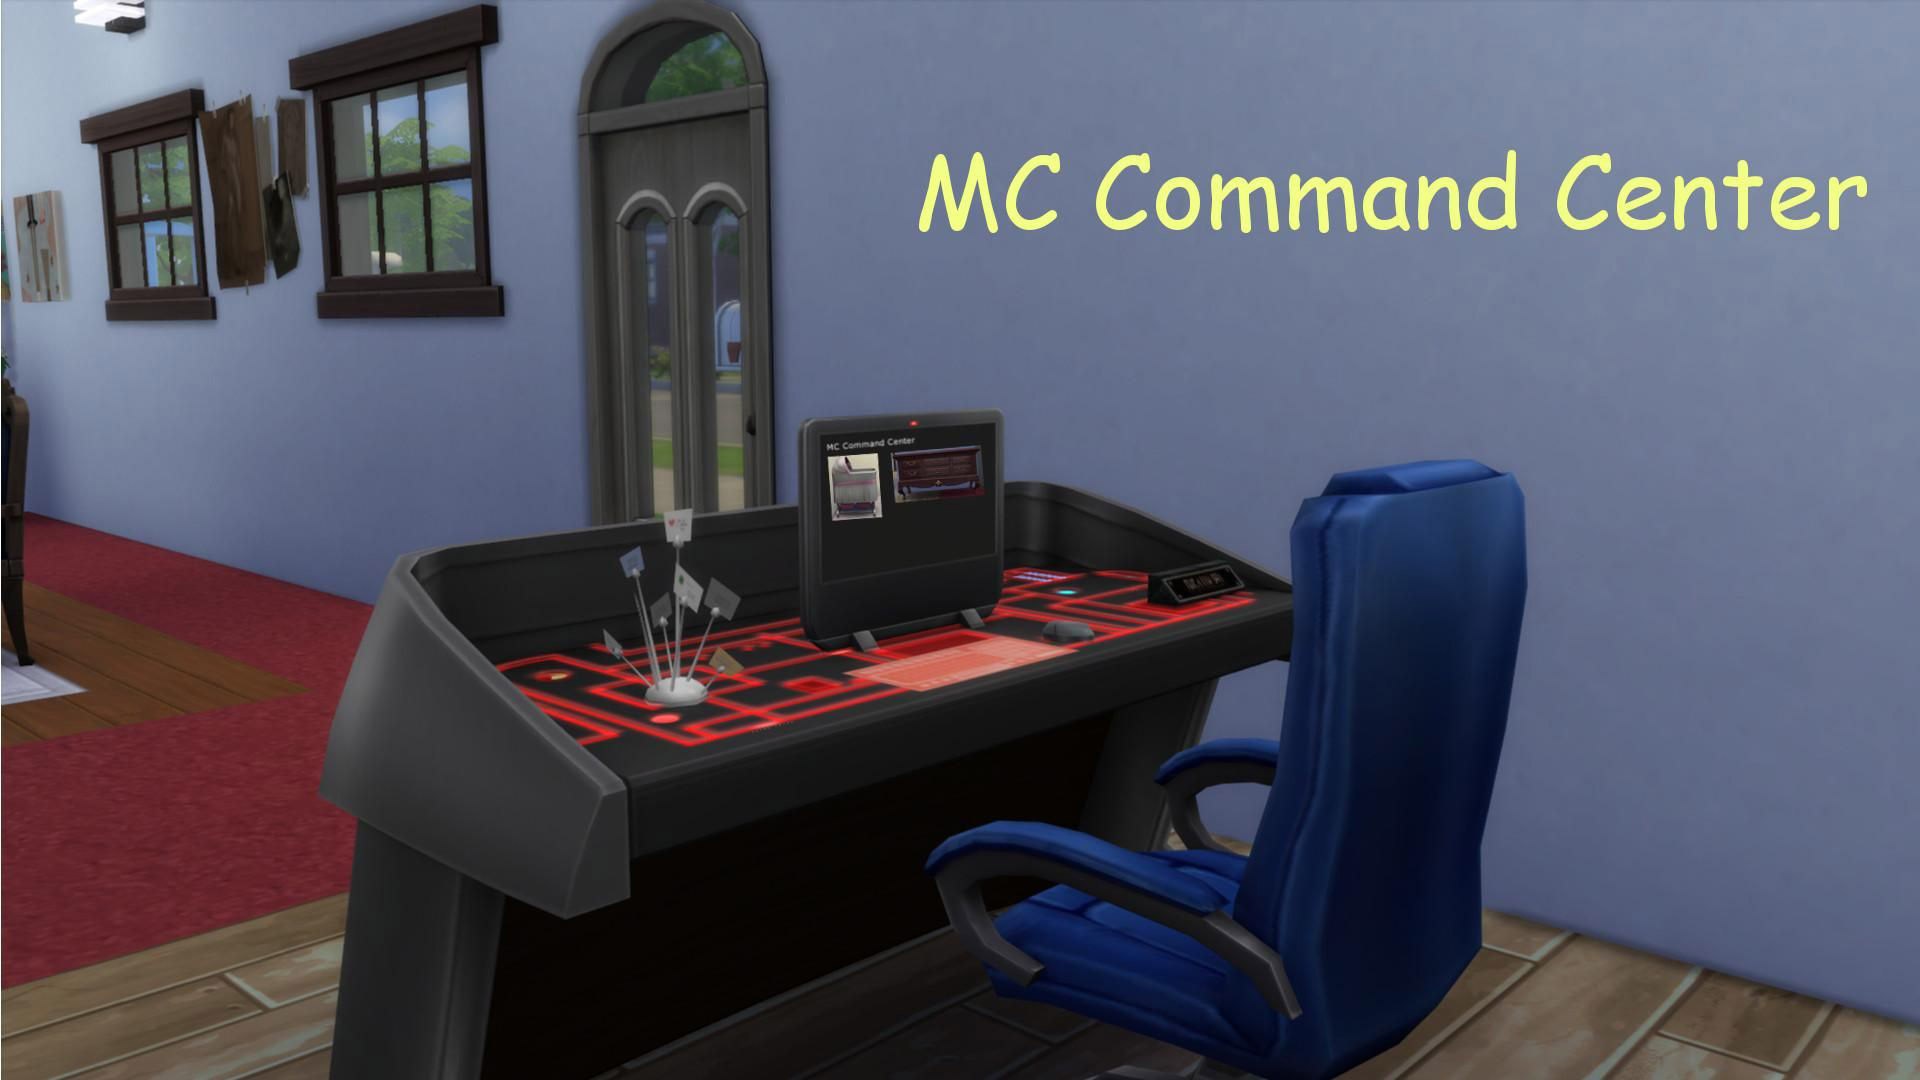 Sims 4 mod MC Command Center: The command center table